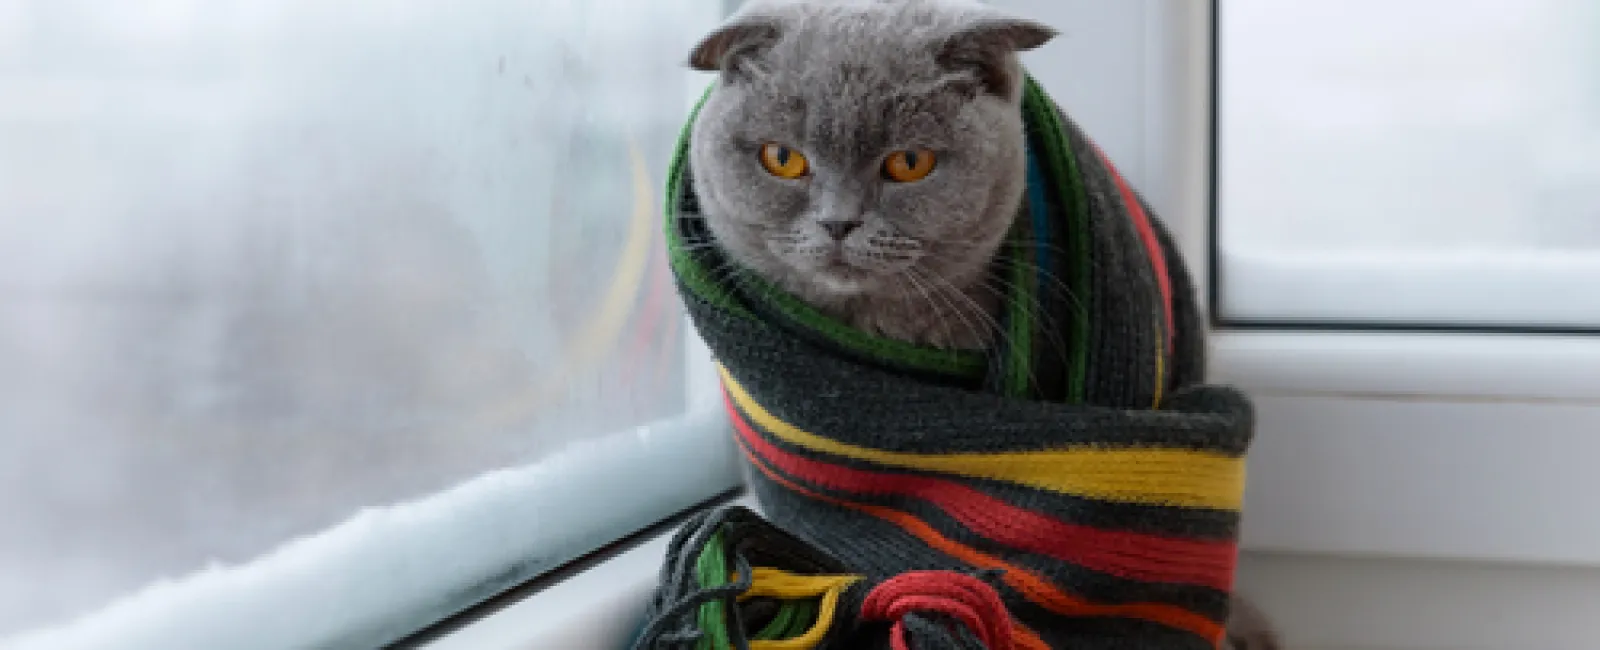 a cat wearing a sweater